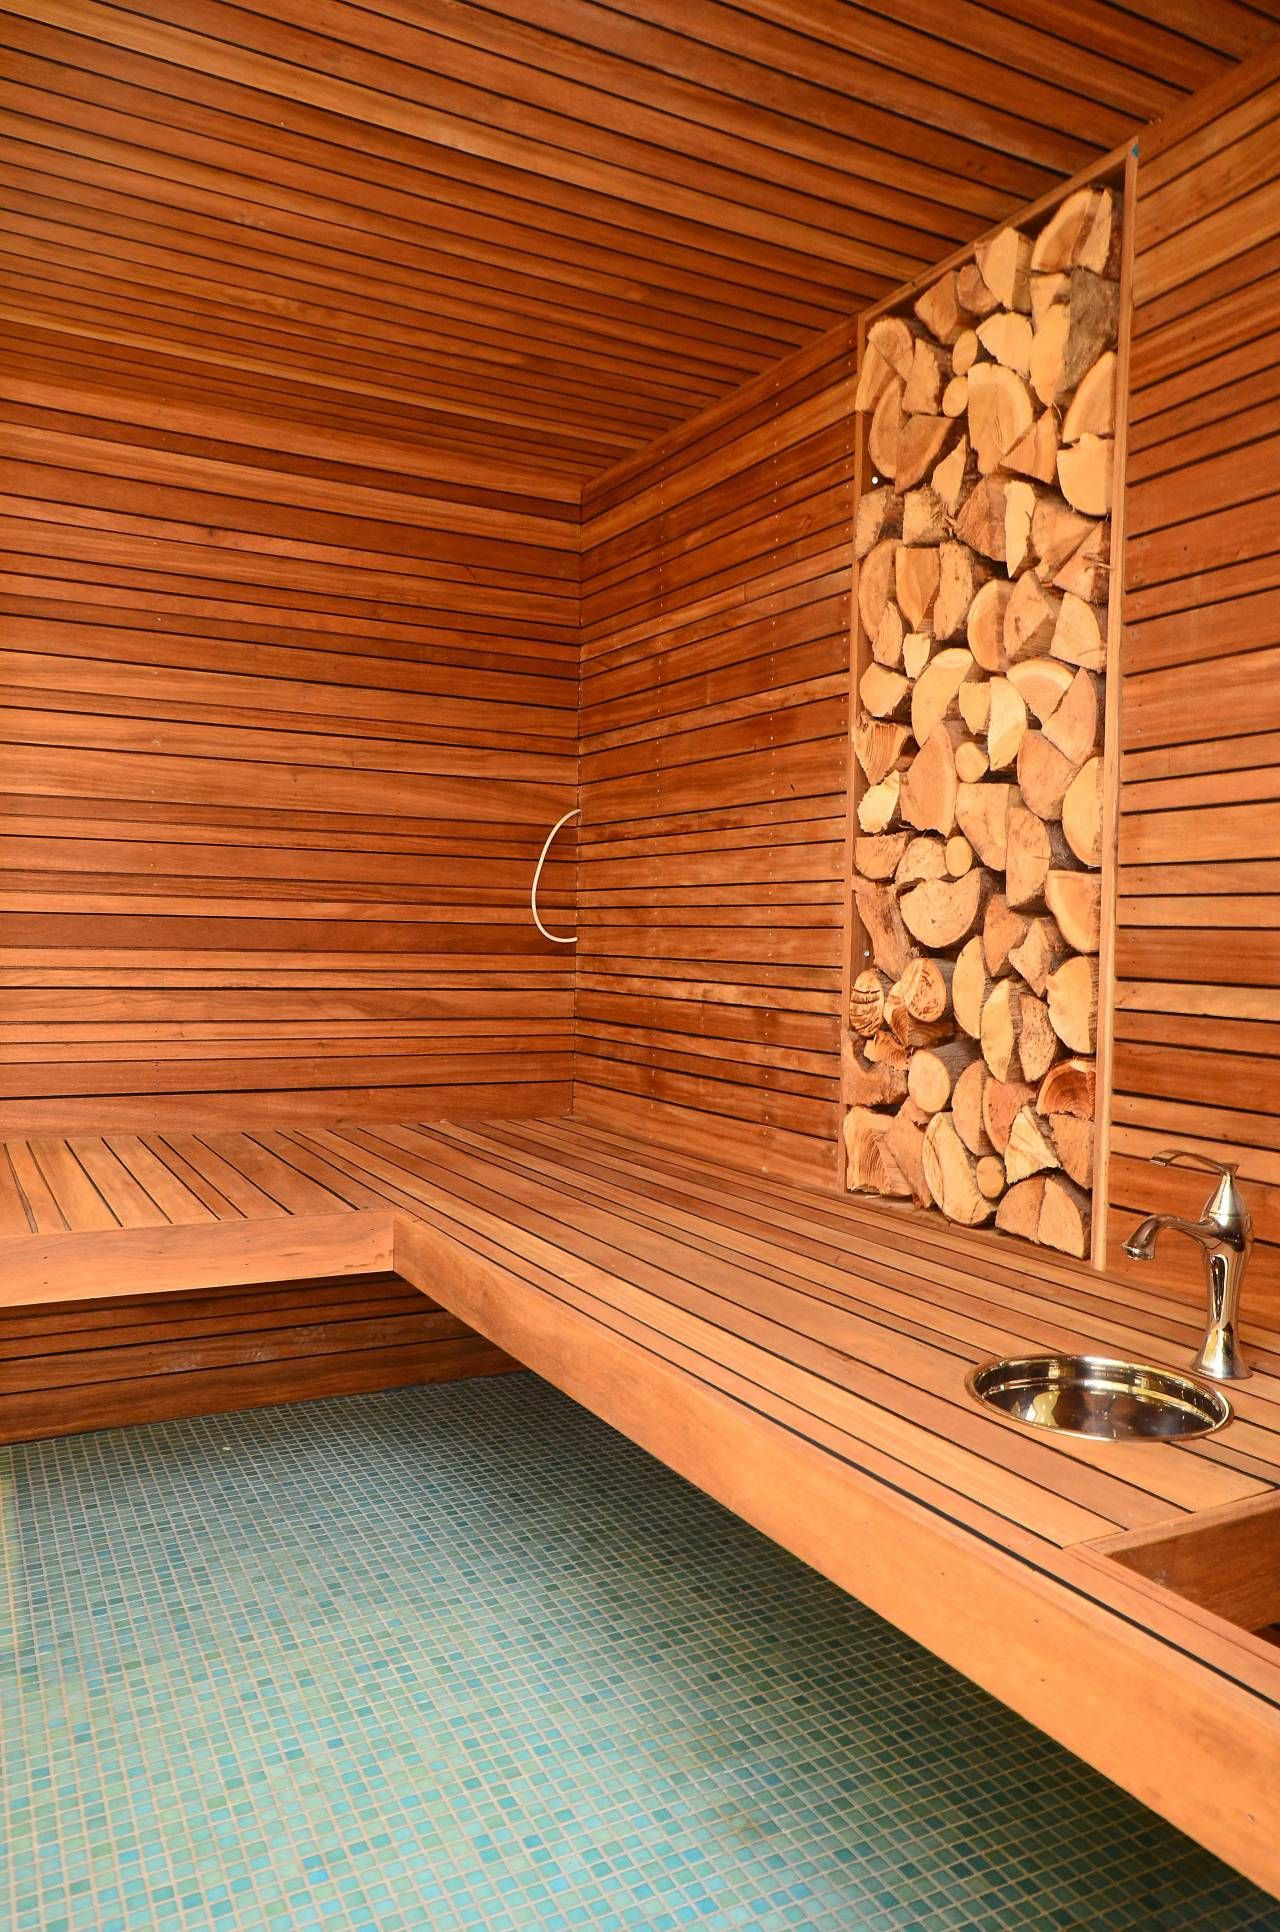 Best ideas about DIY Steam Room
. Save or Pin DIY sauna sauna spa Now.